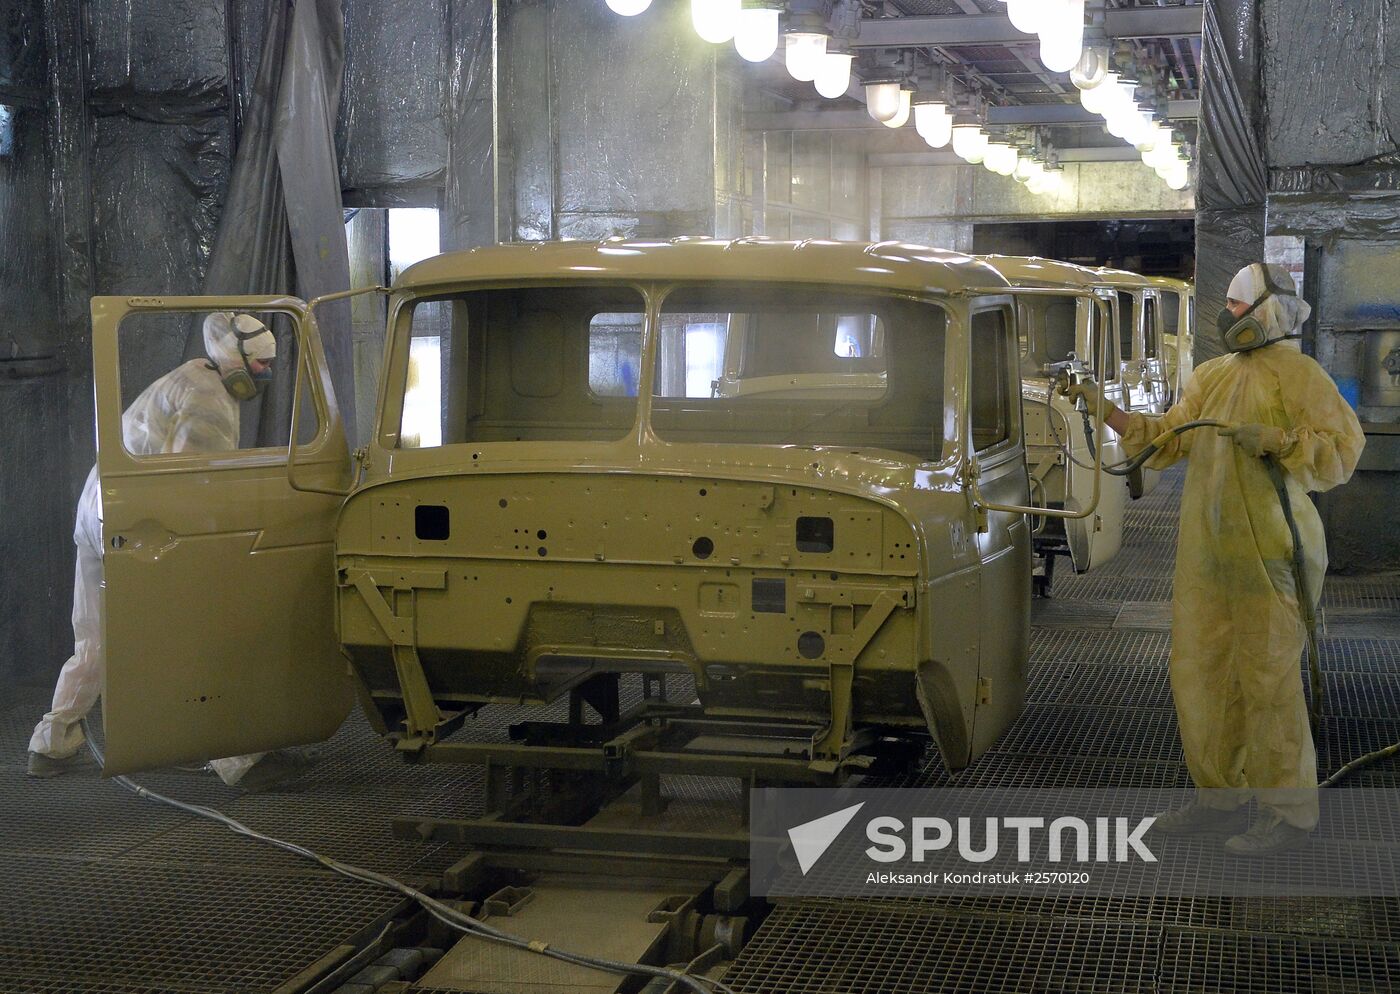 Ural automobile plant in Chelyabinsk region